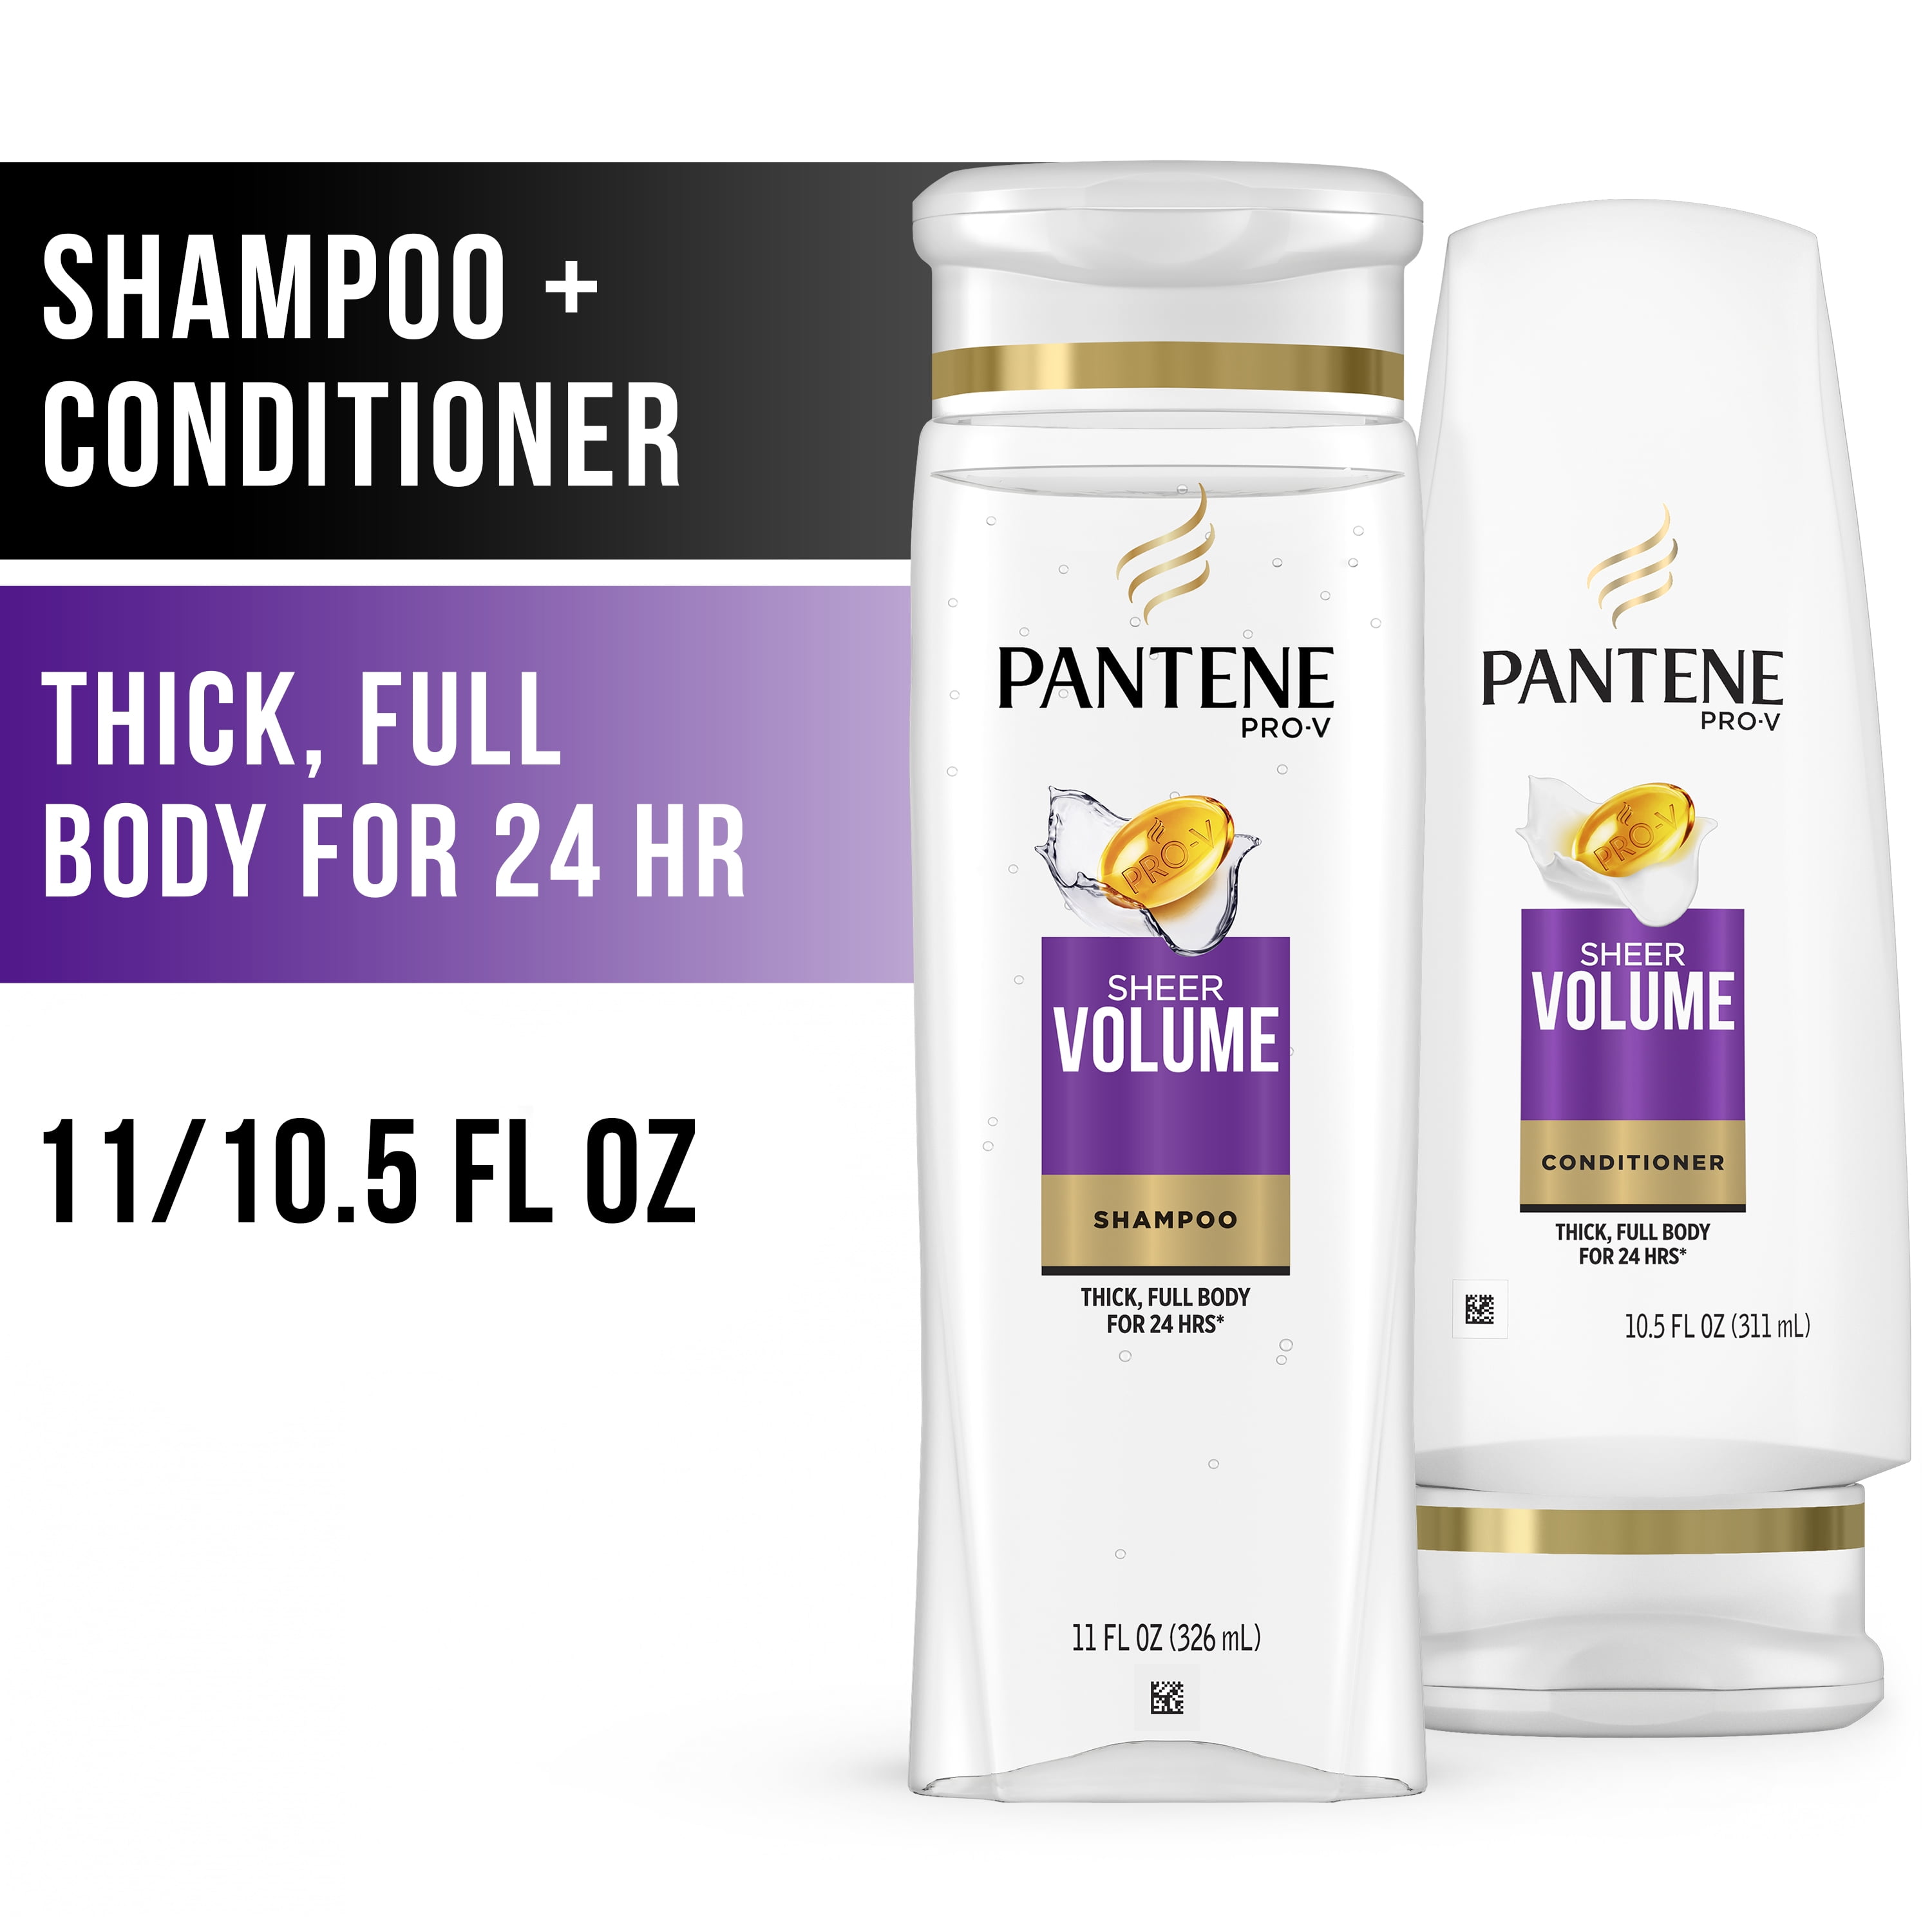 Pantene Shampoo Conditioner Pack, Sheer Volume, Algeria